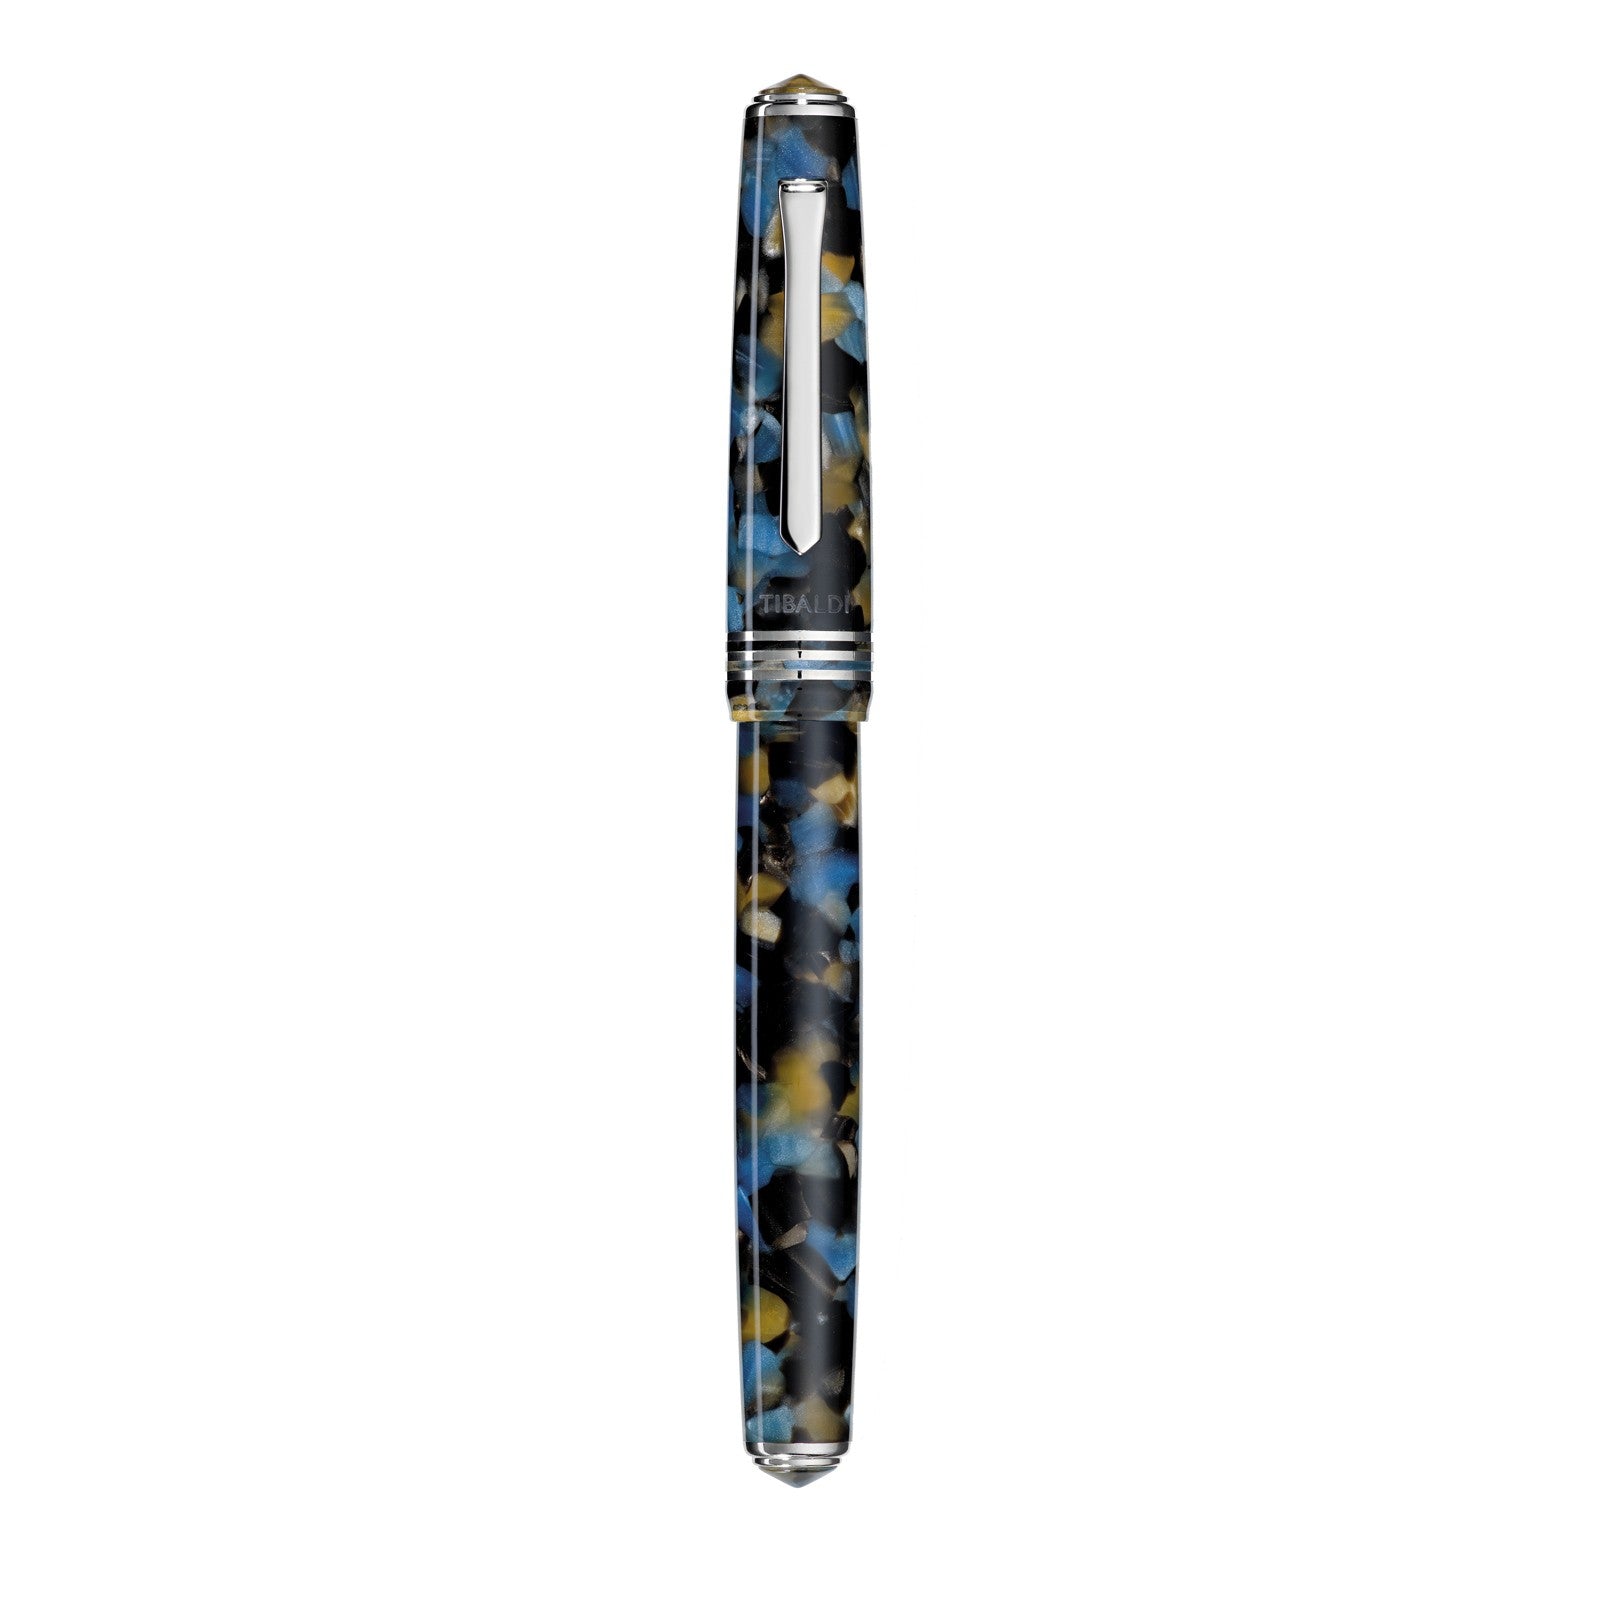 Tibaldi stilografica N60 in resina blu Samarkand punta media N60-681_FP-M - Gioielleria Capodagli